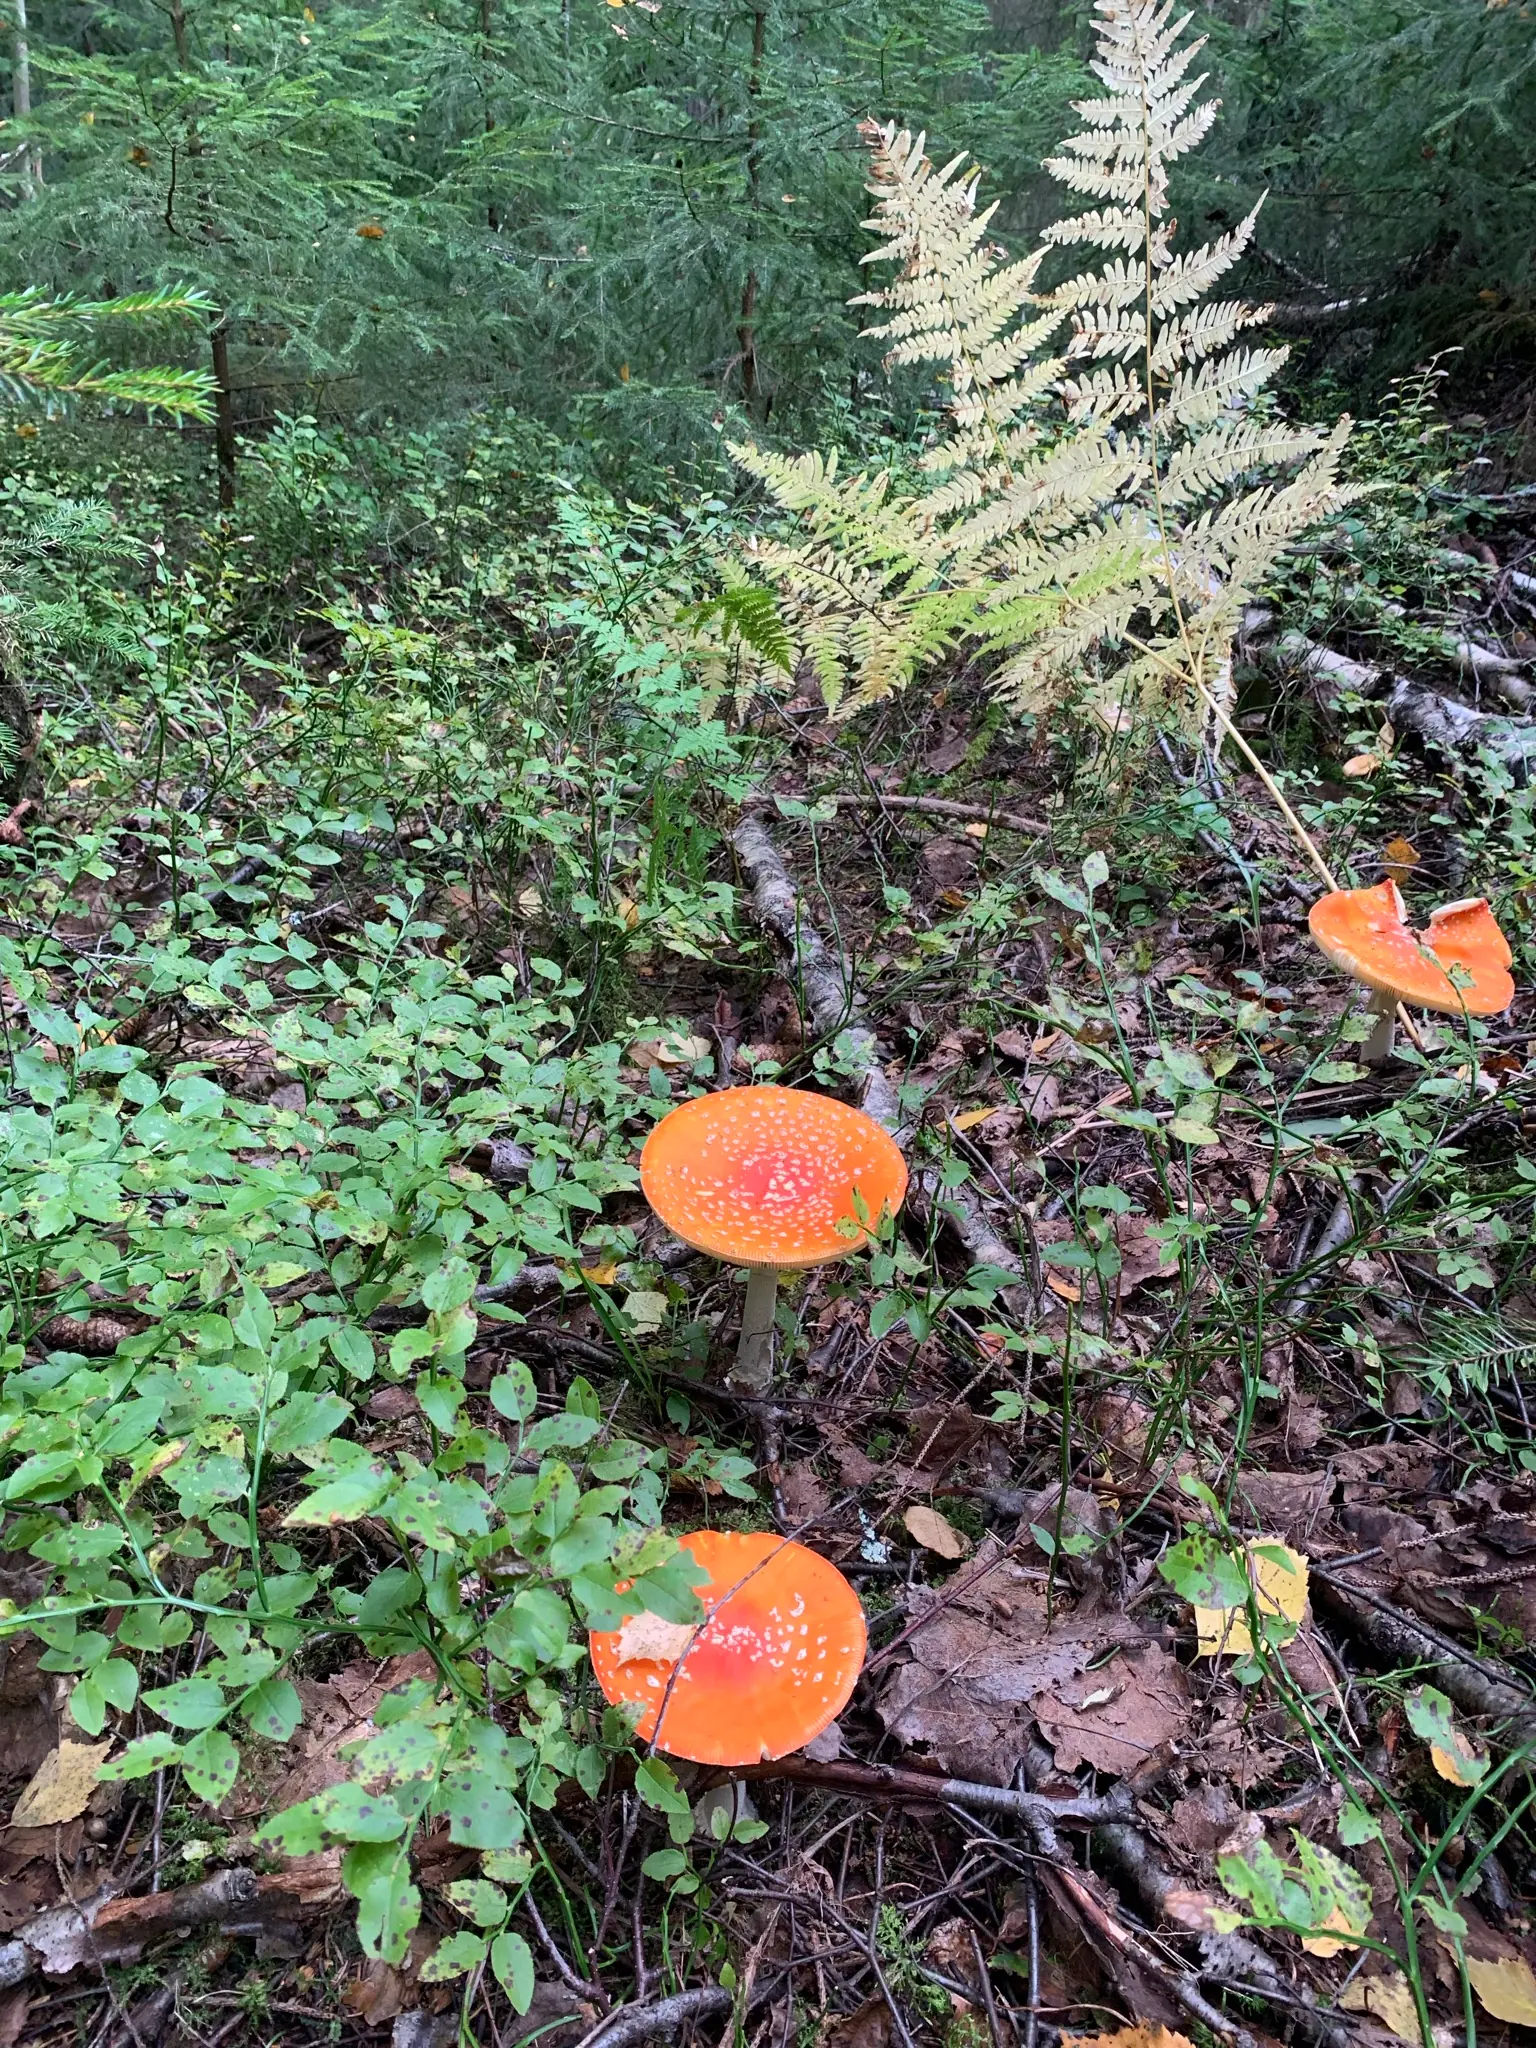 two large mushroom, I think of genus Amanita